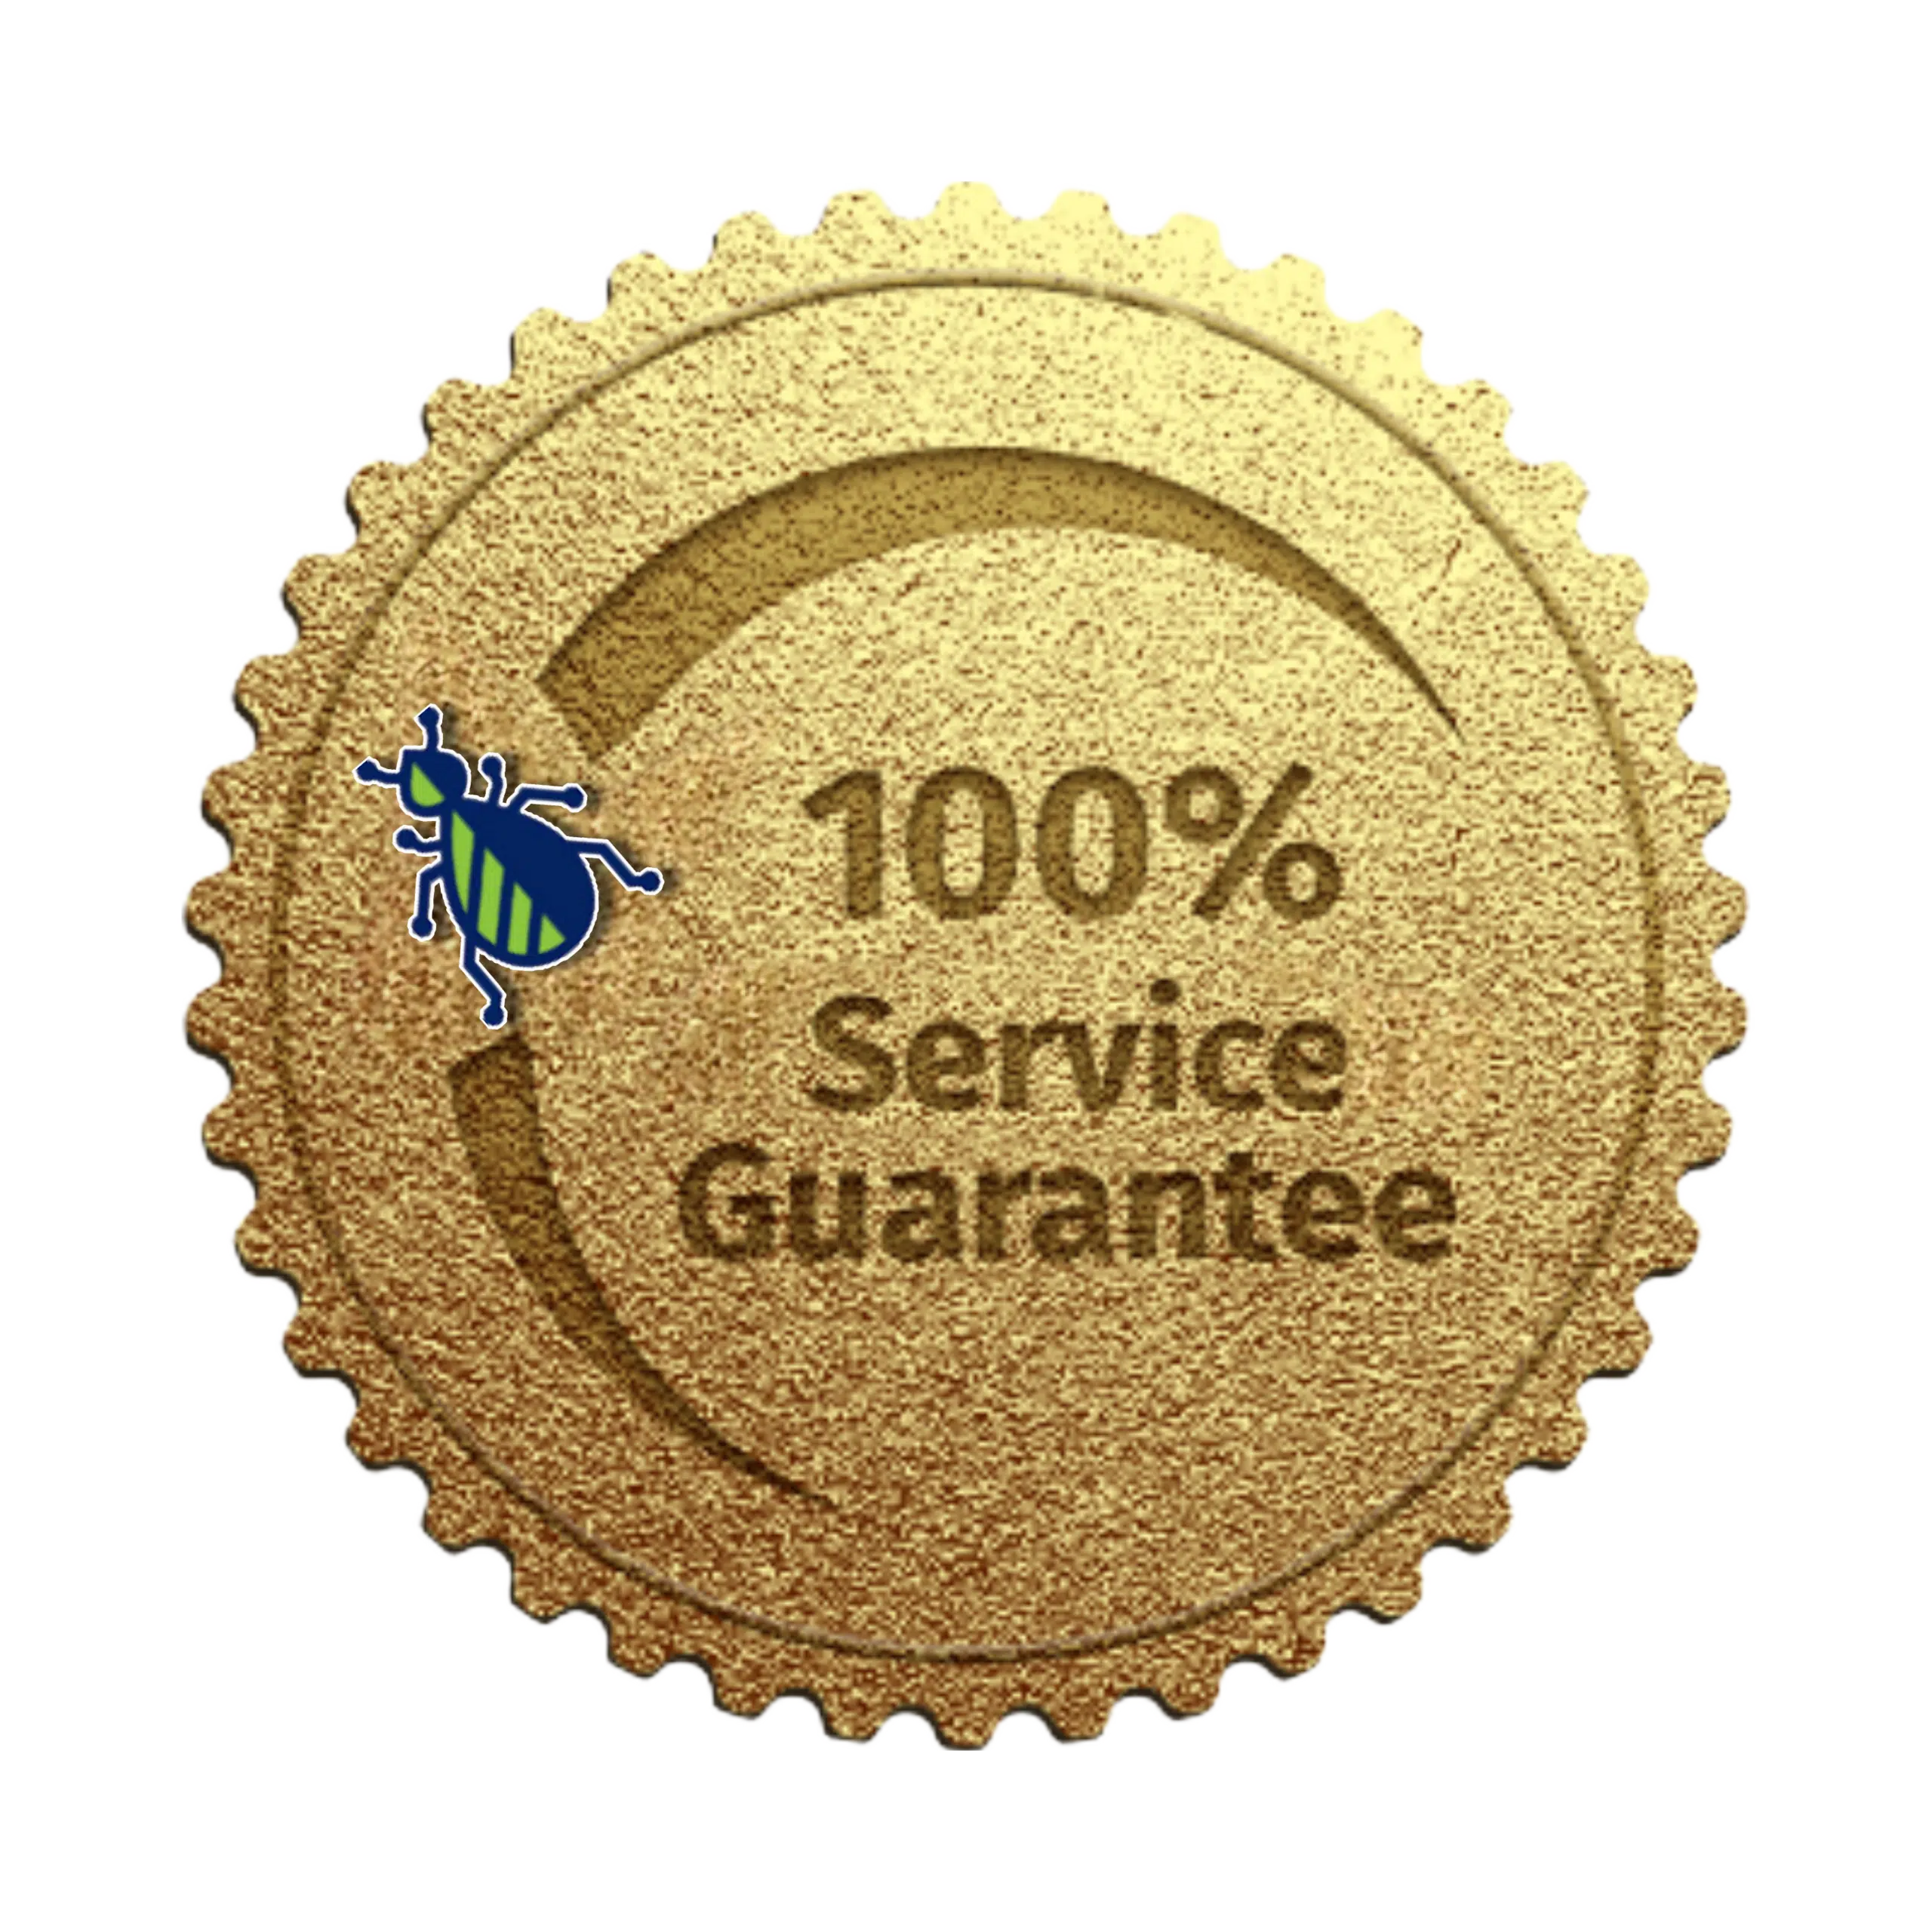 100% Service Guarantee